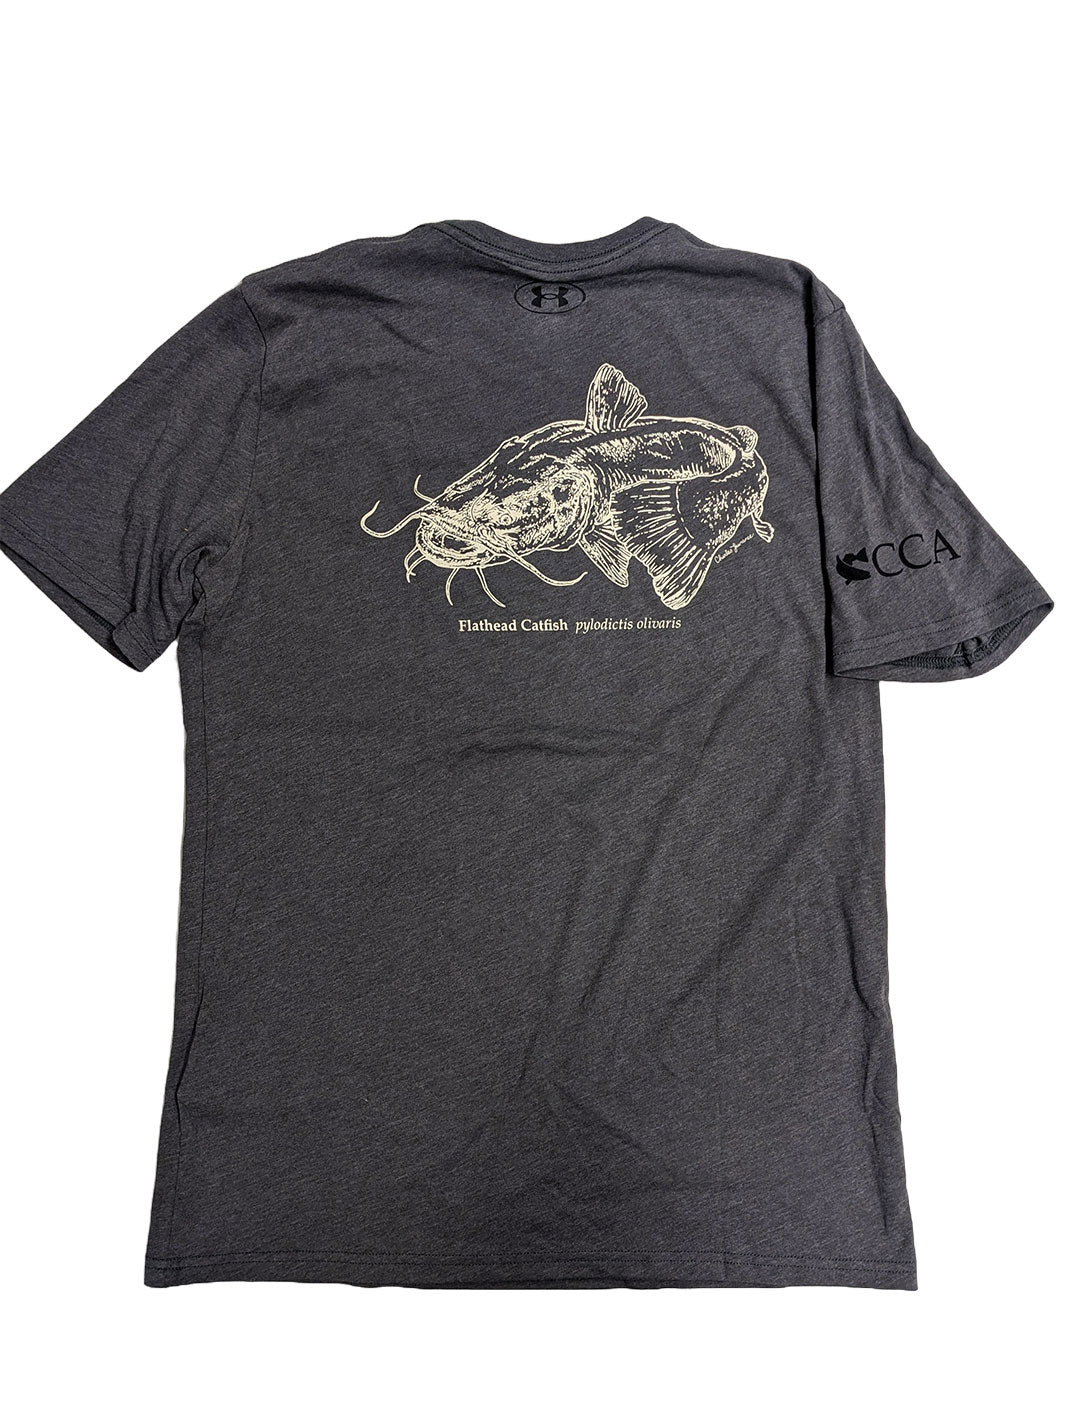 CCA Invasives Count - Flathead Catfish T-Shirt